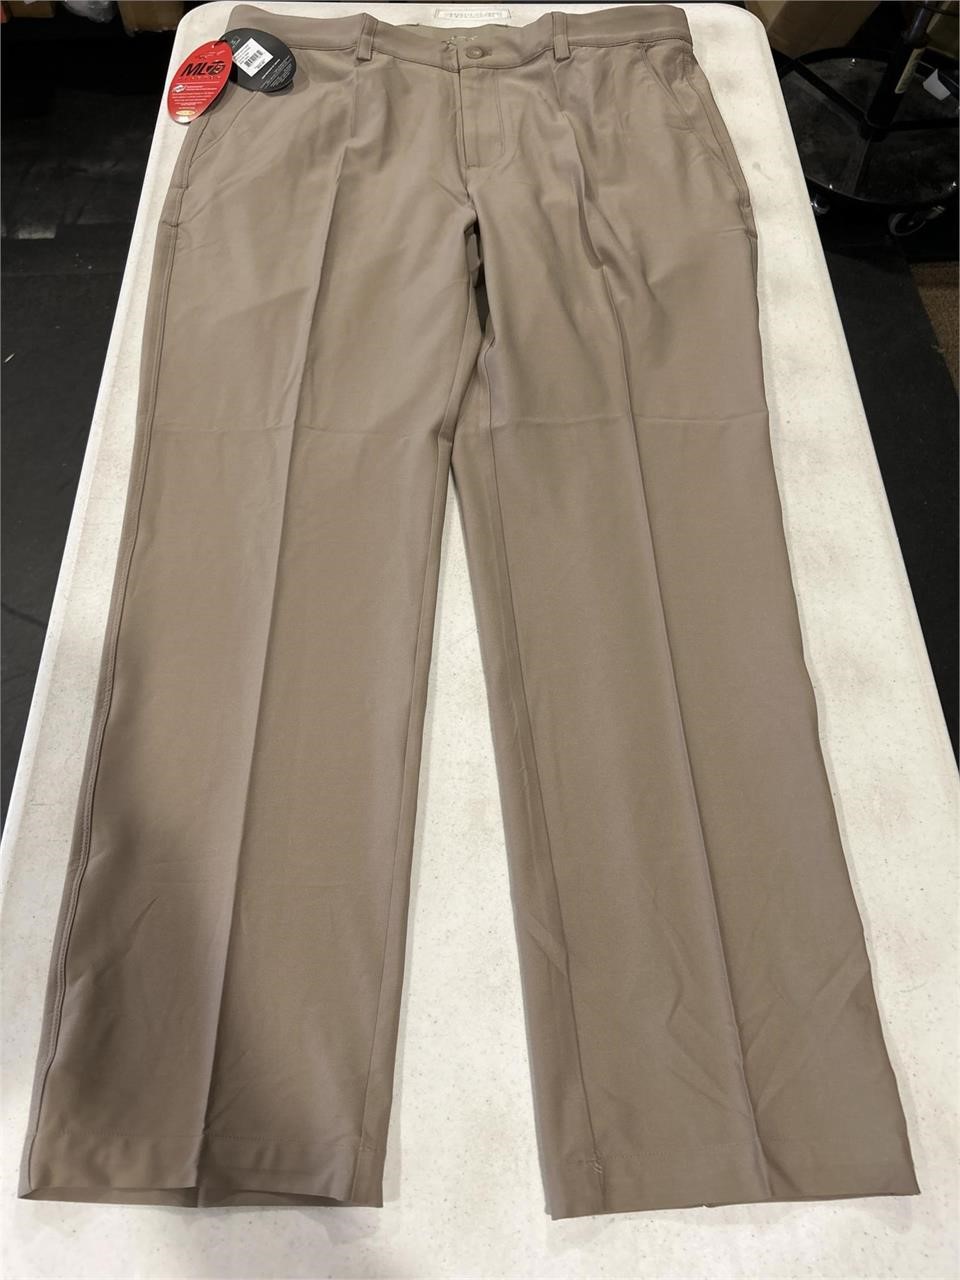 Greg Norman ML75 Microlux Pant - Color Tan, 36/30